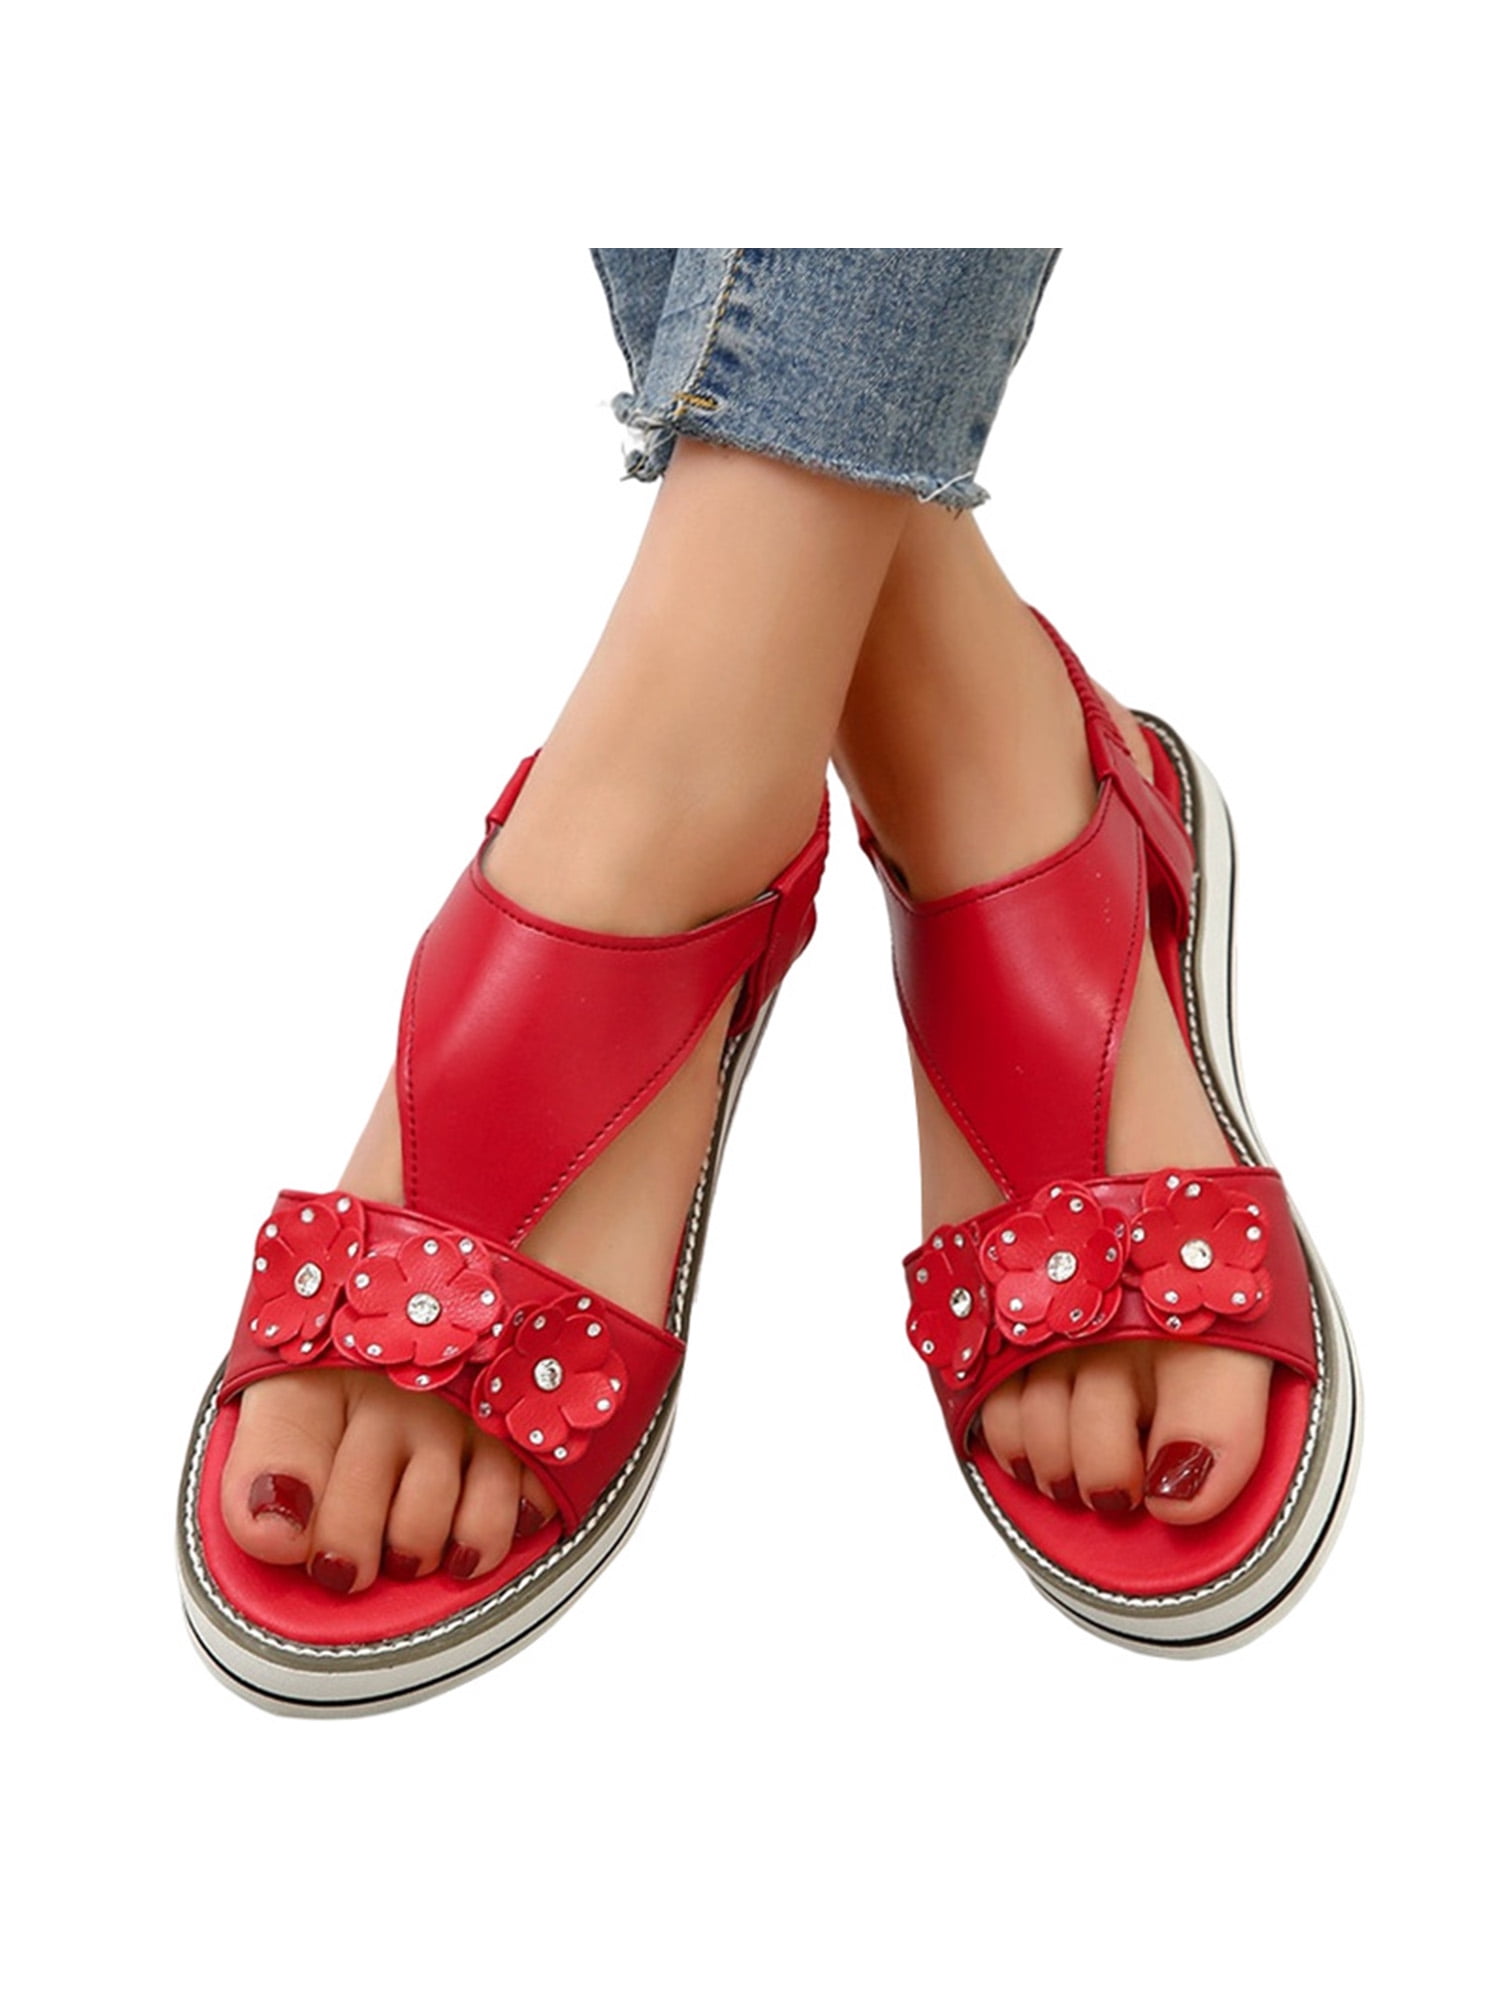 Details about   Women Casual Summer Beach Sandals Ladies Ankle Strap Platform Breathable Shoes 